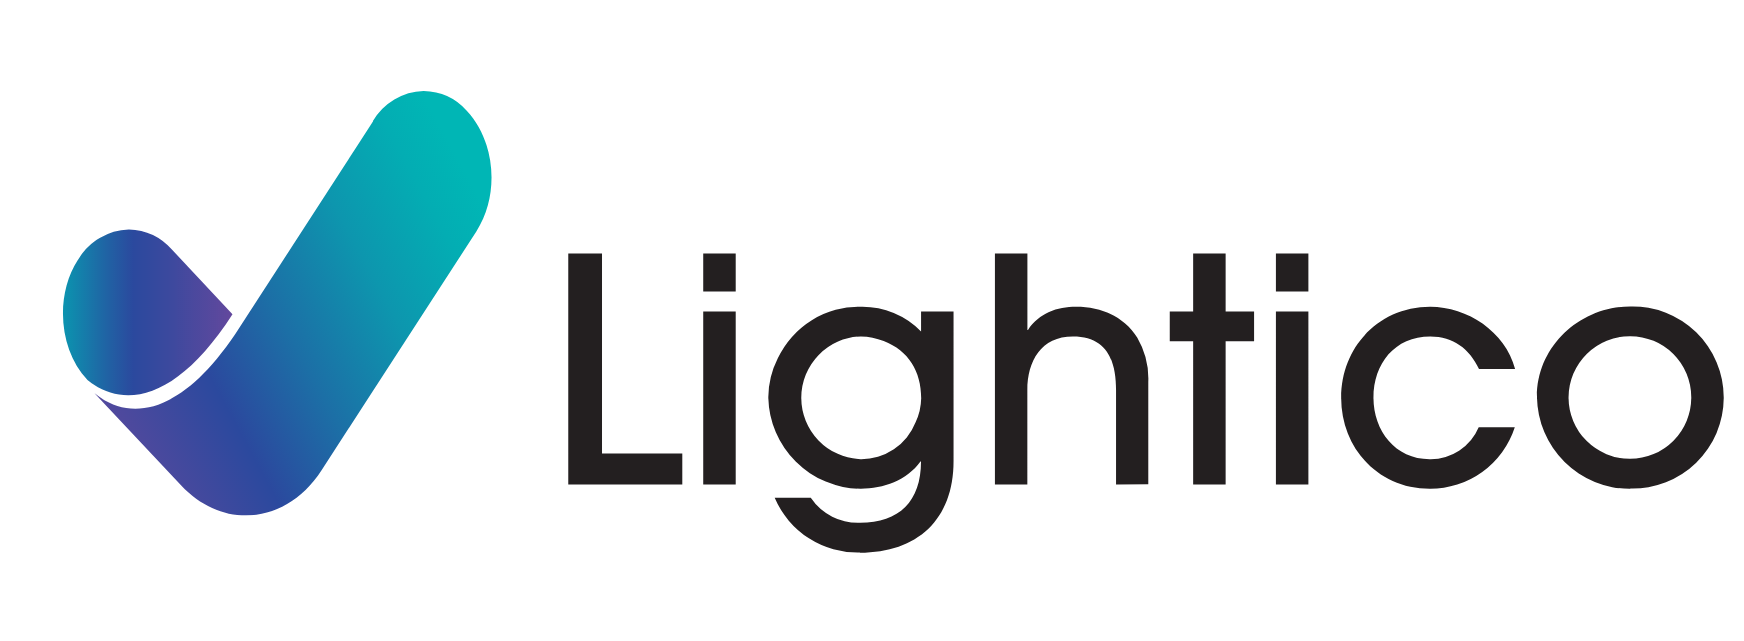 Lightico Logo